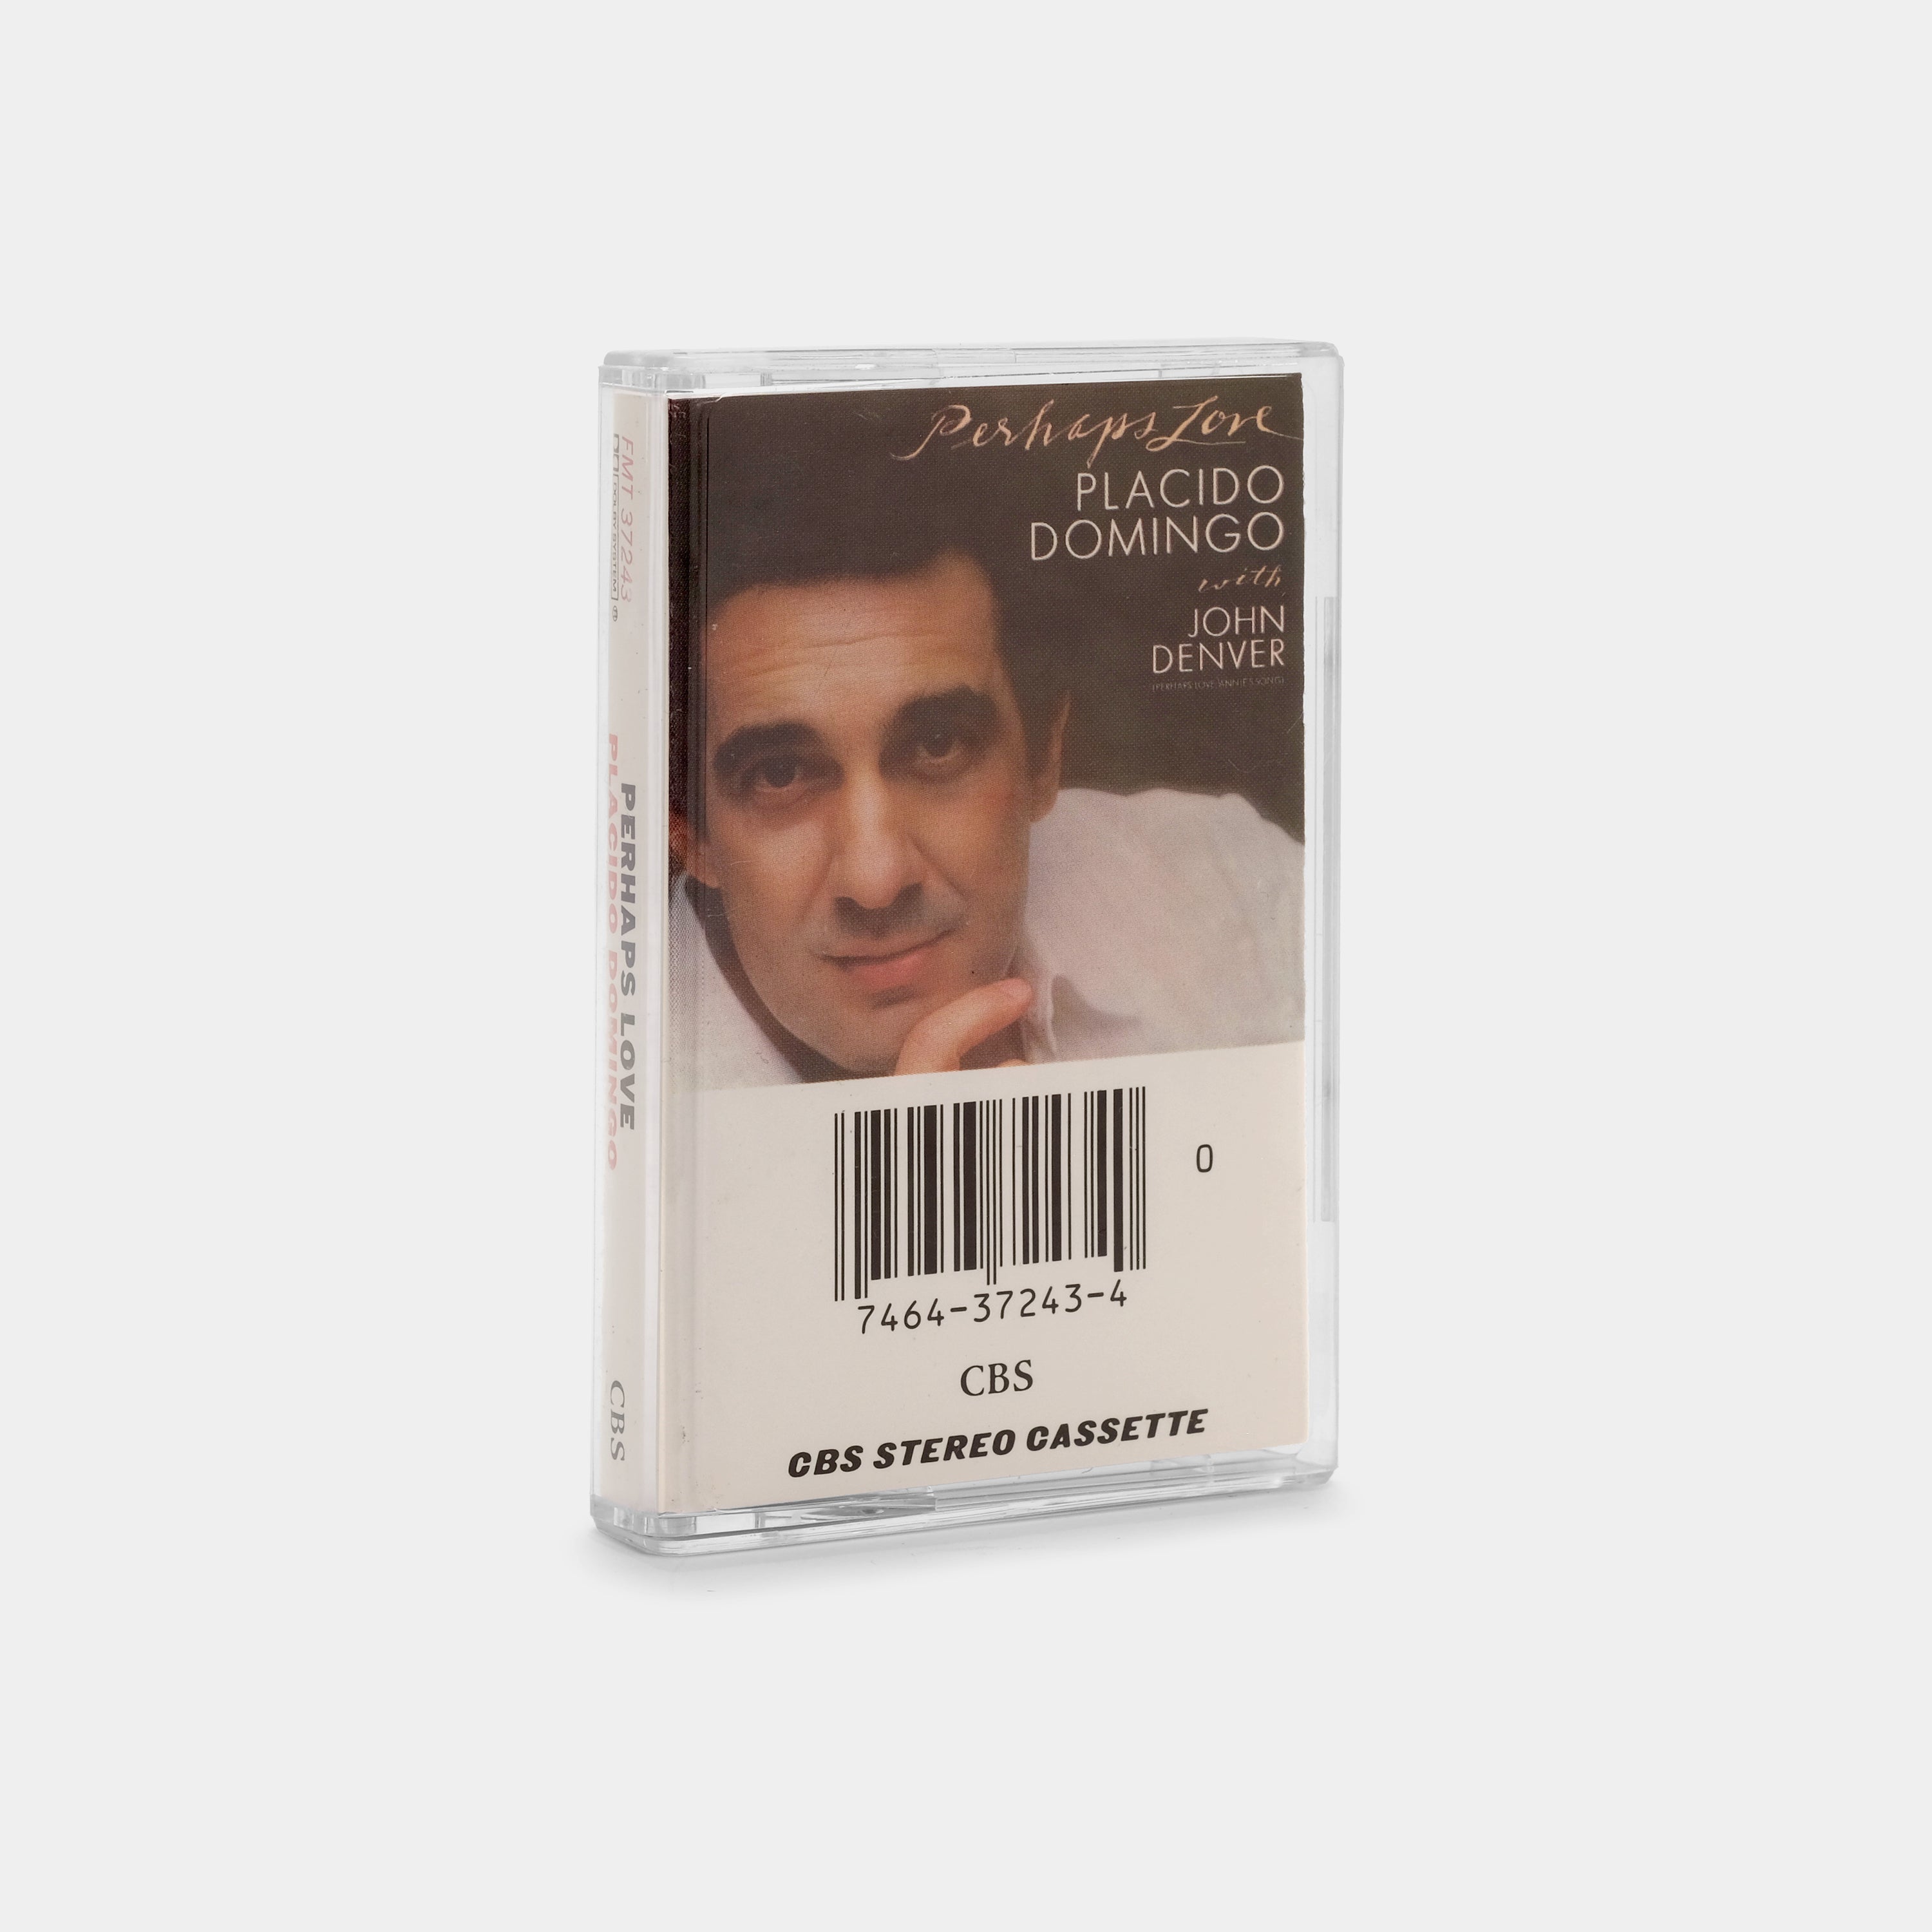 Placido Domingo with John Denver - Perhaps Love Cassette Tape